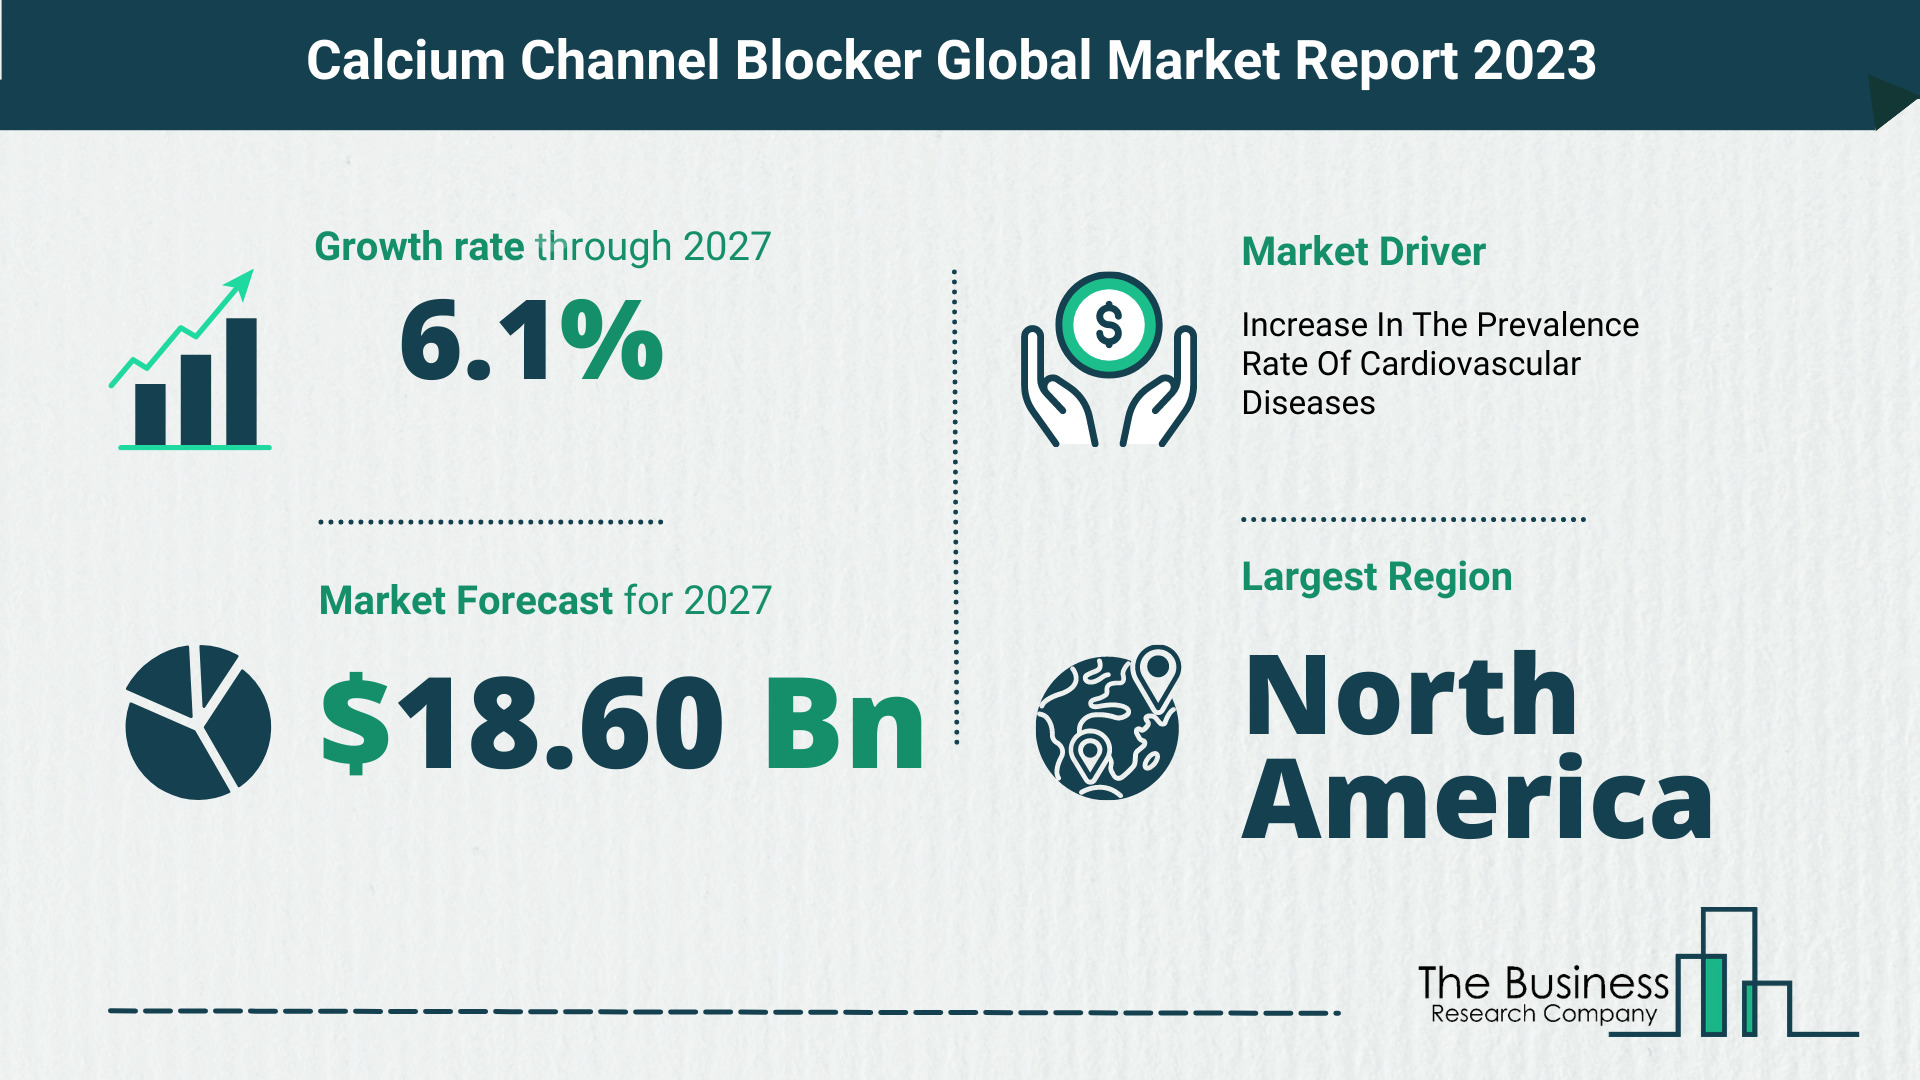 Global Calcium Channel Blocker Market Opportunities And Strategies 2023